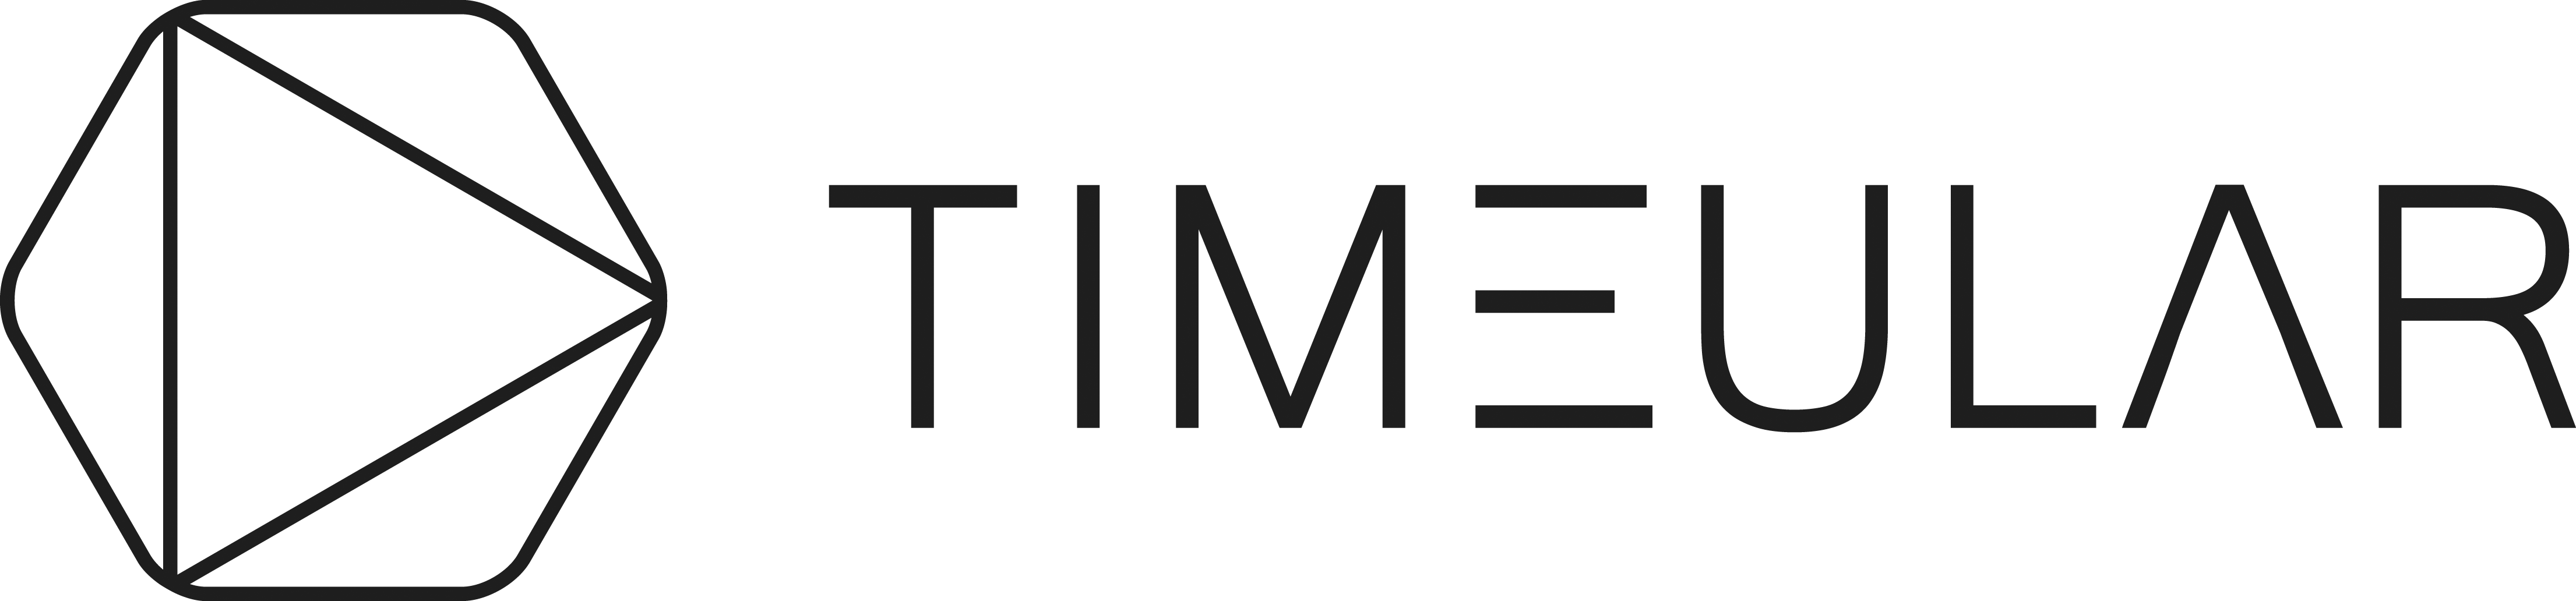 Timeular_Logo